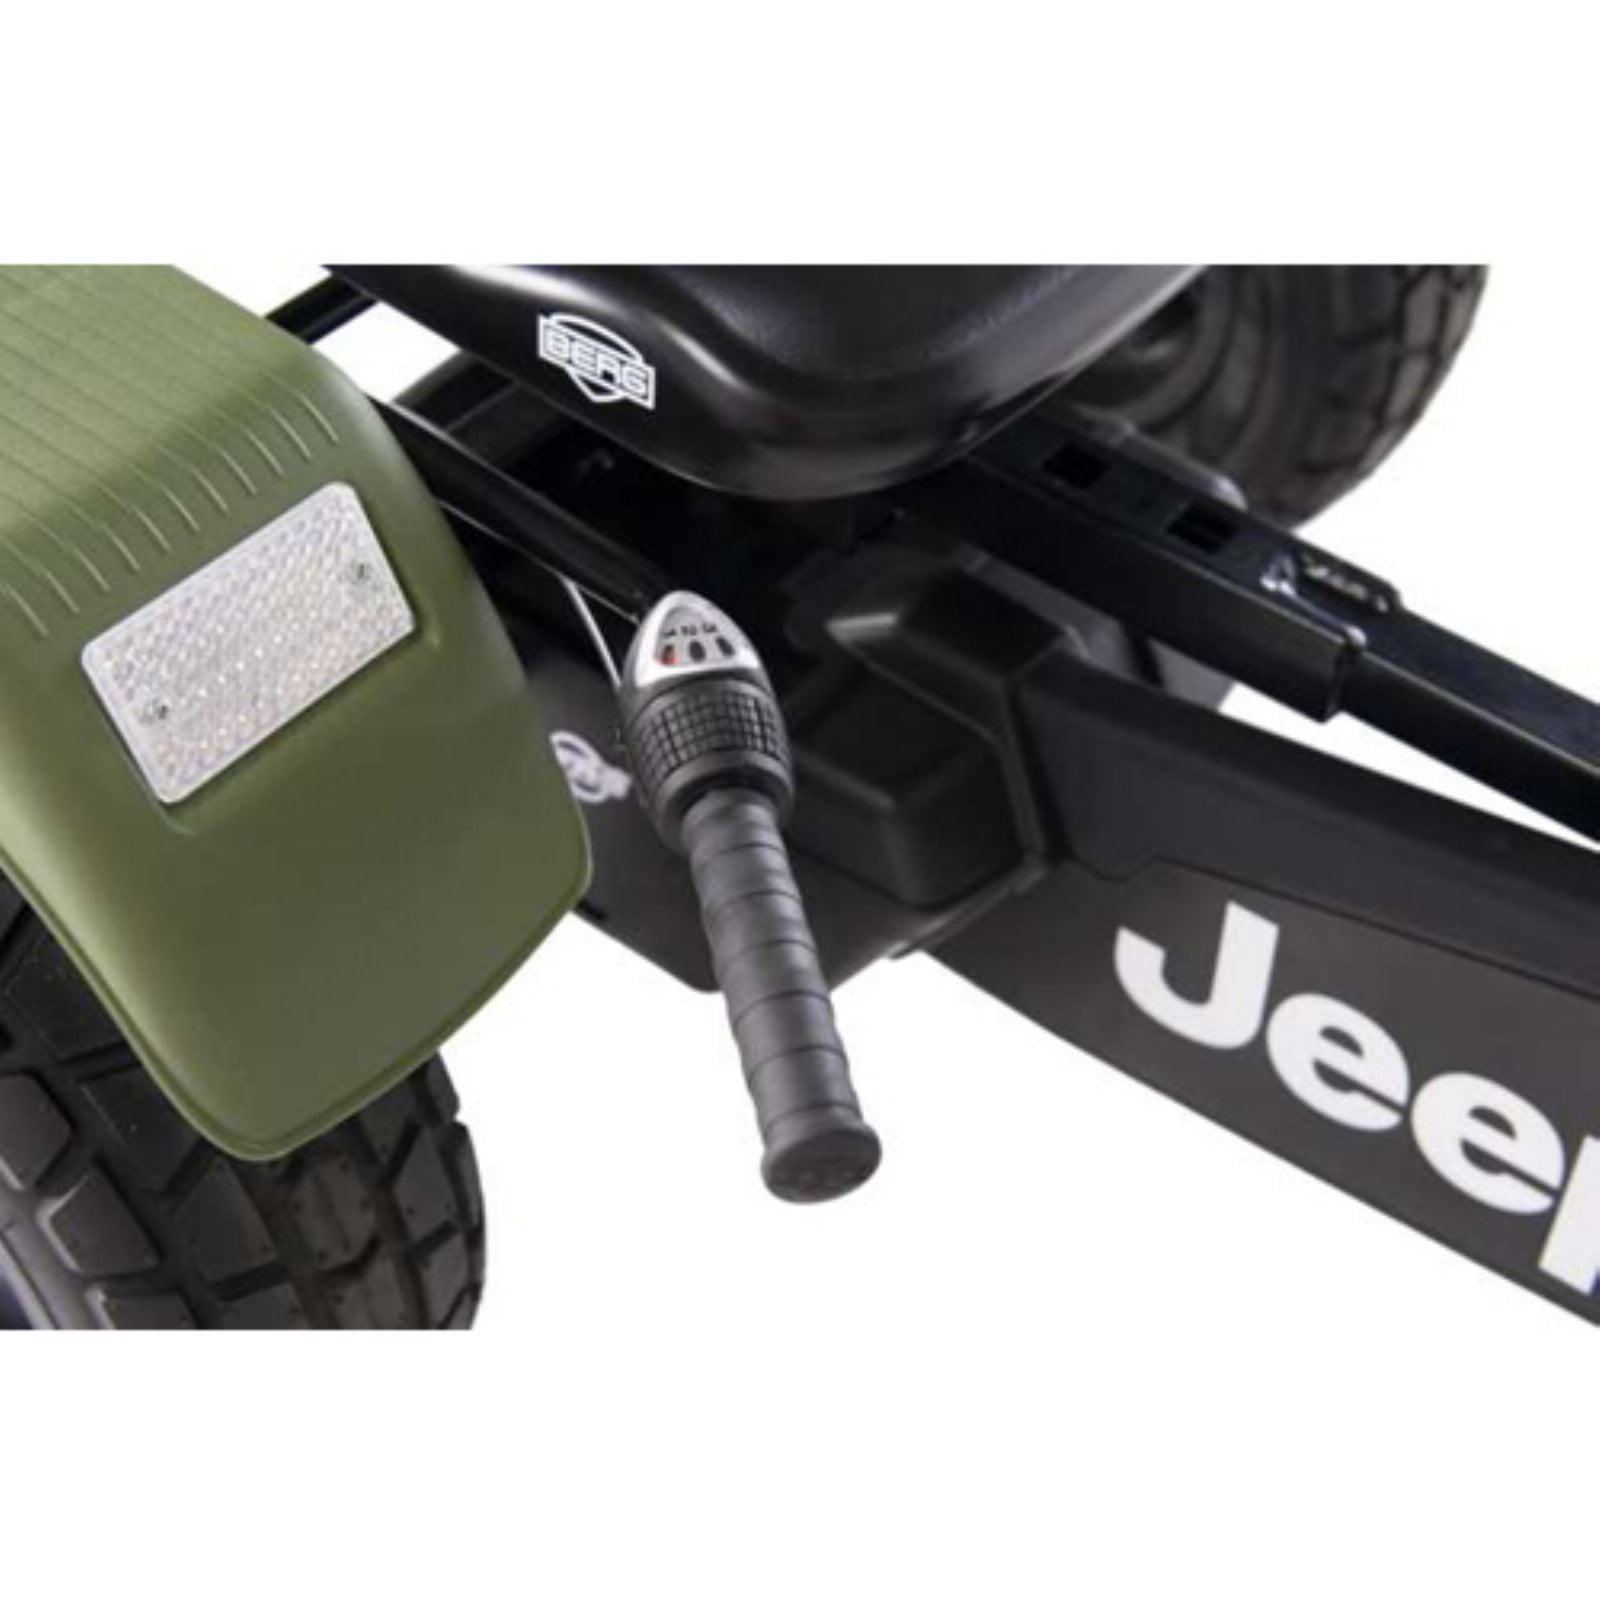 BERG Gokart Jeep Revolution olivegrün - NEW E-BFR-3, BFR, BFR-3